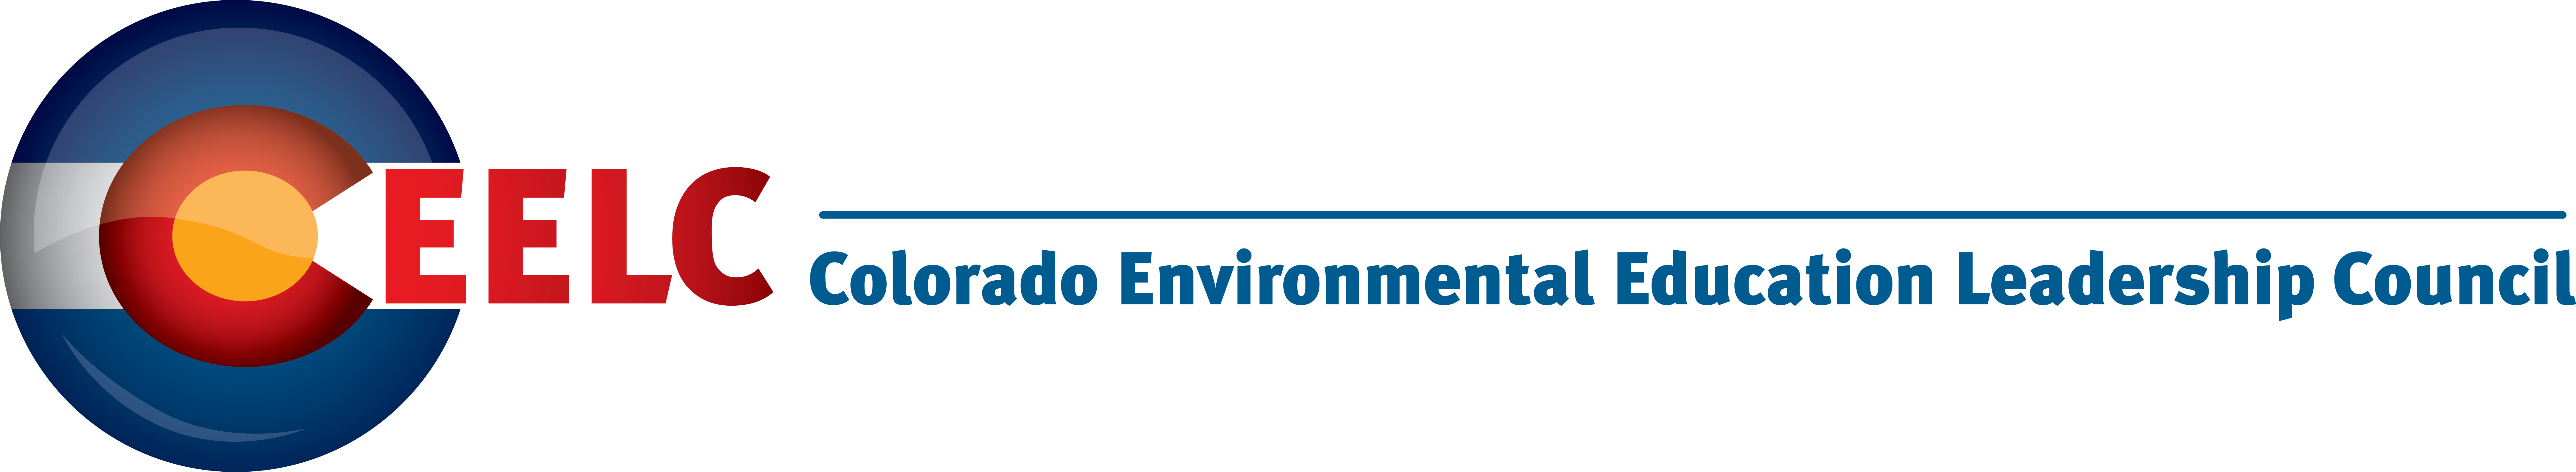 Colorado Environmental Education Leadership Council logo